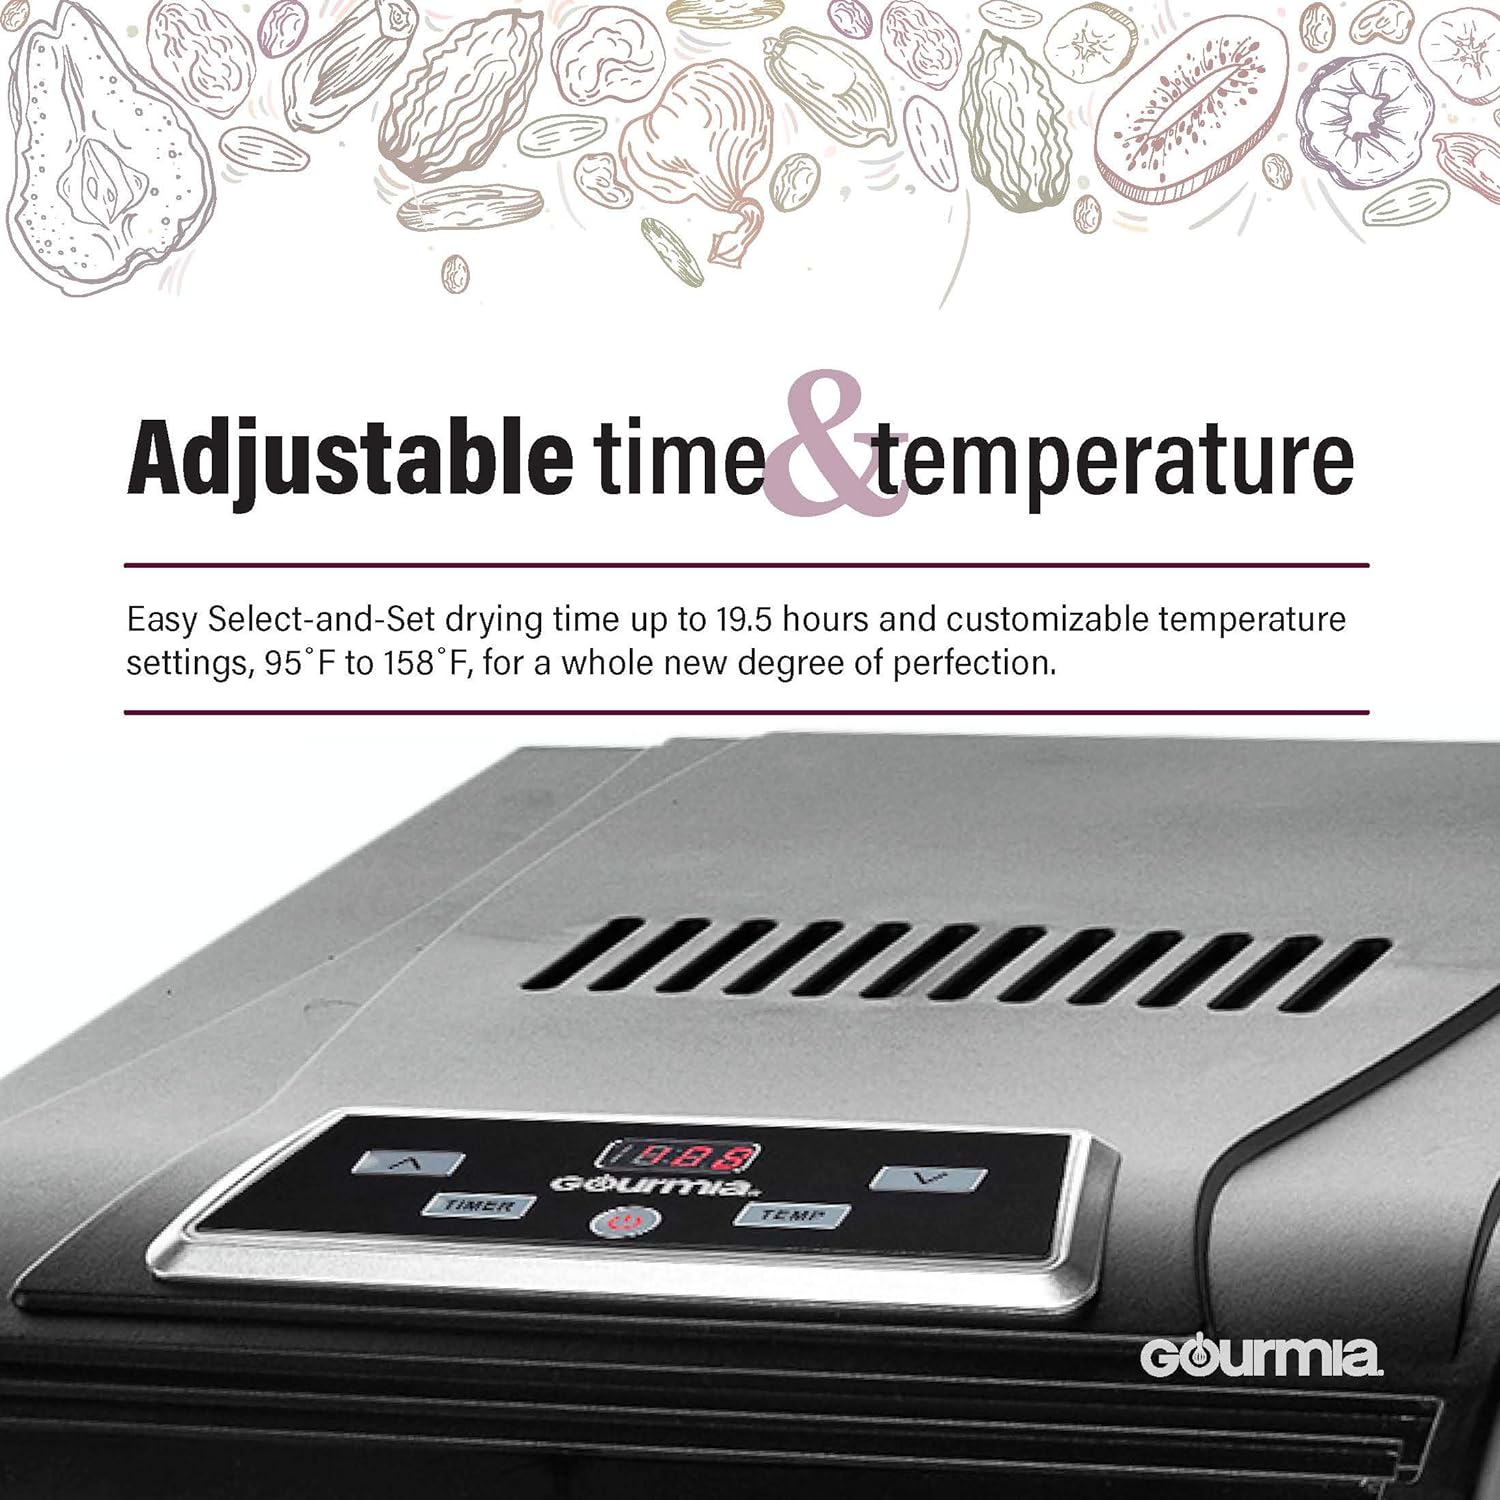 Gourmia GFD1950 Premium Electric Food Dehydrator Machine - Digital Timer and Temperature Control - 9 Drying Trays (Refurbished - 90 Days Warranty)